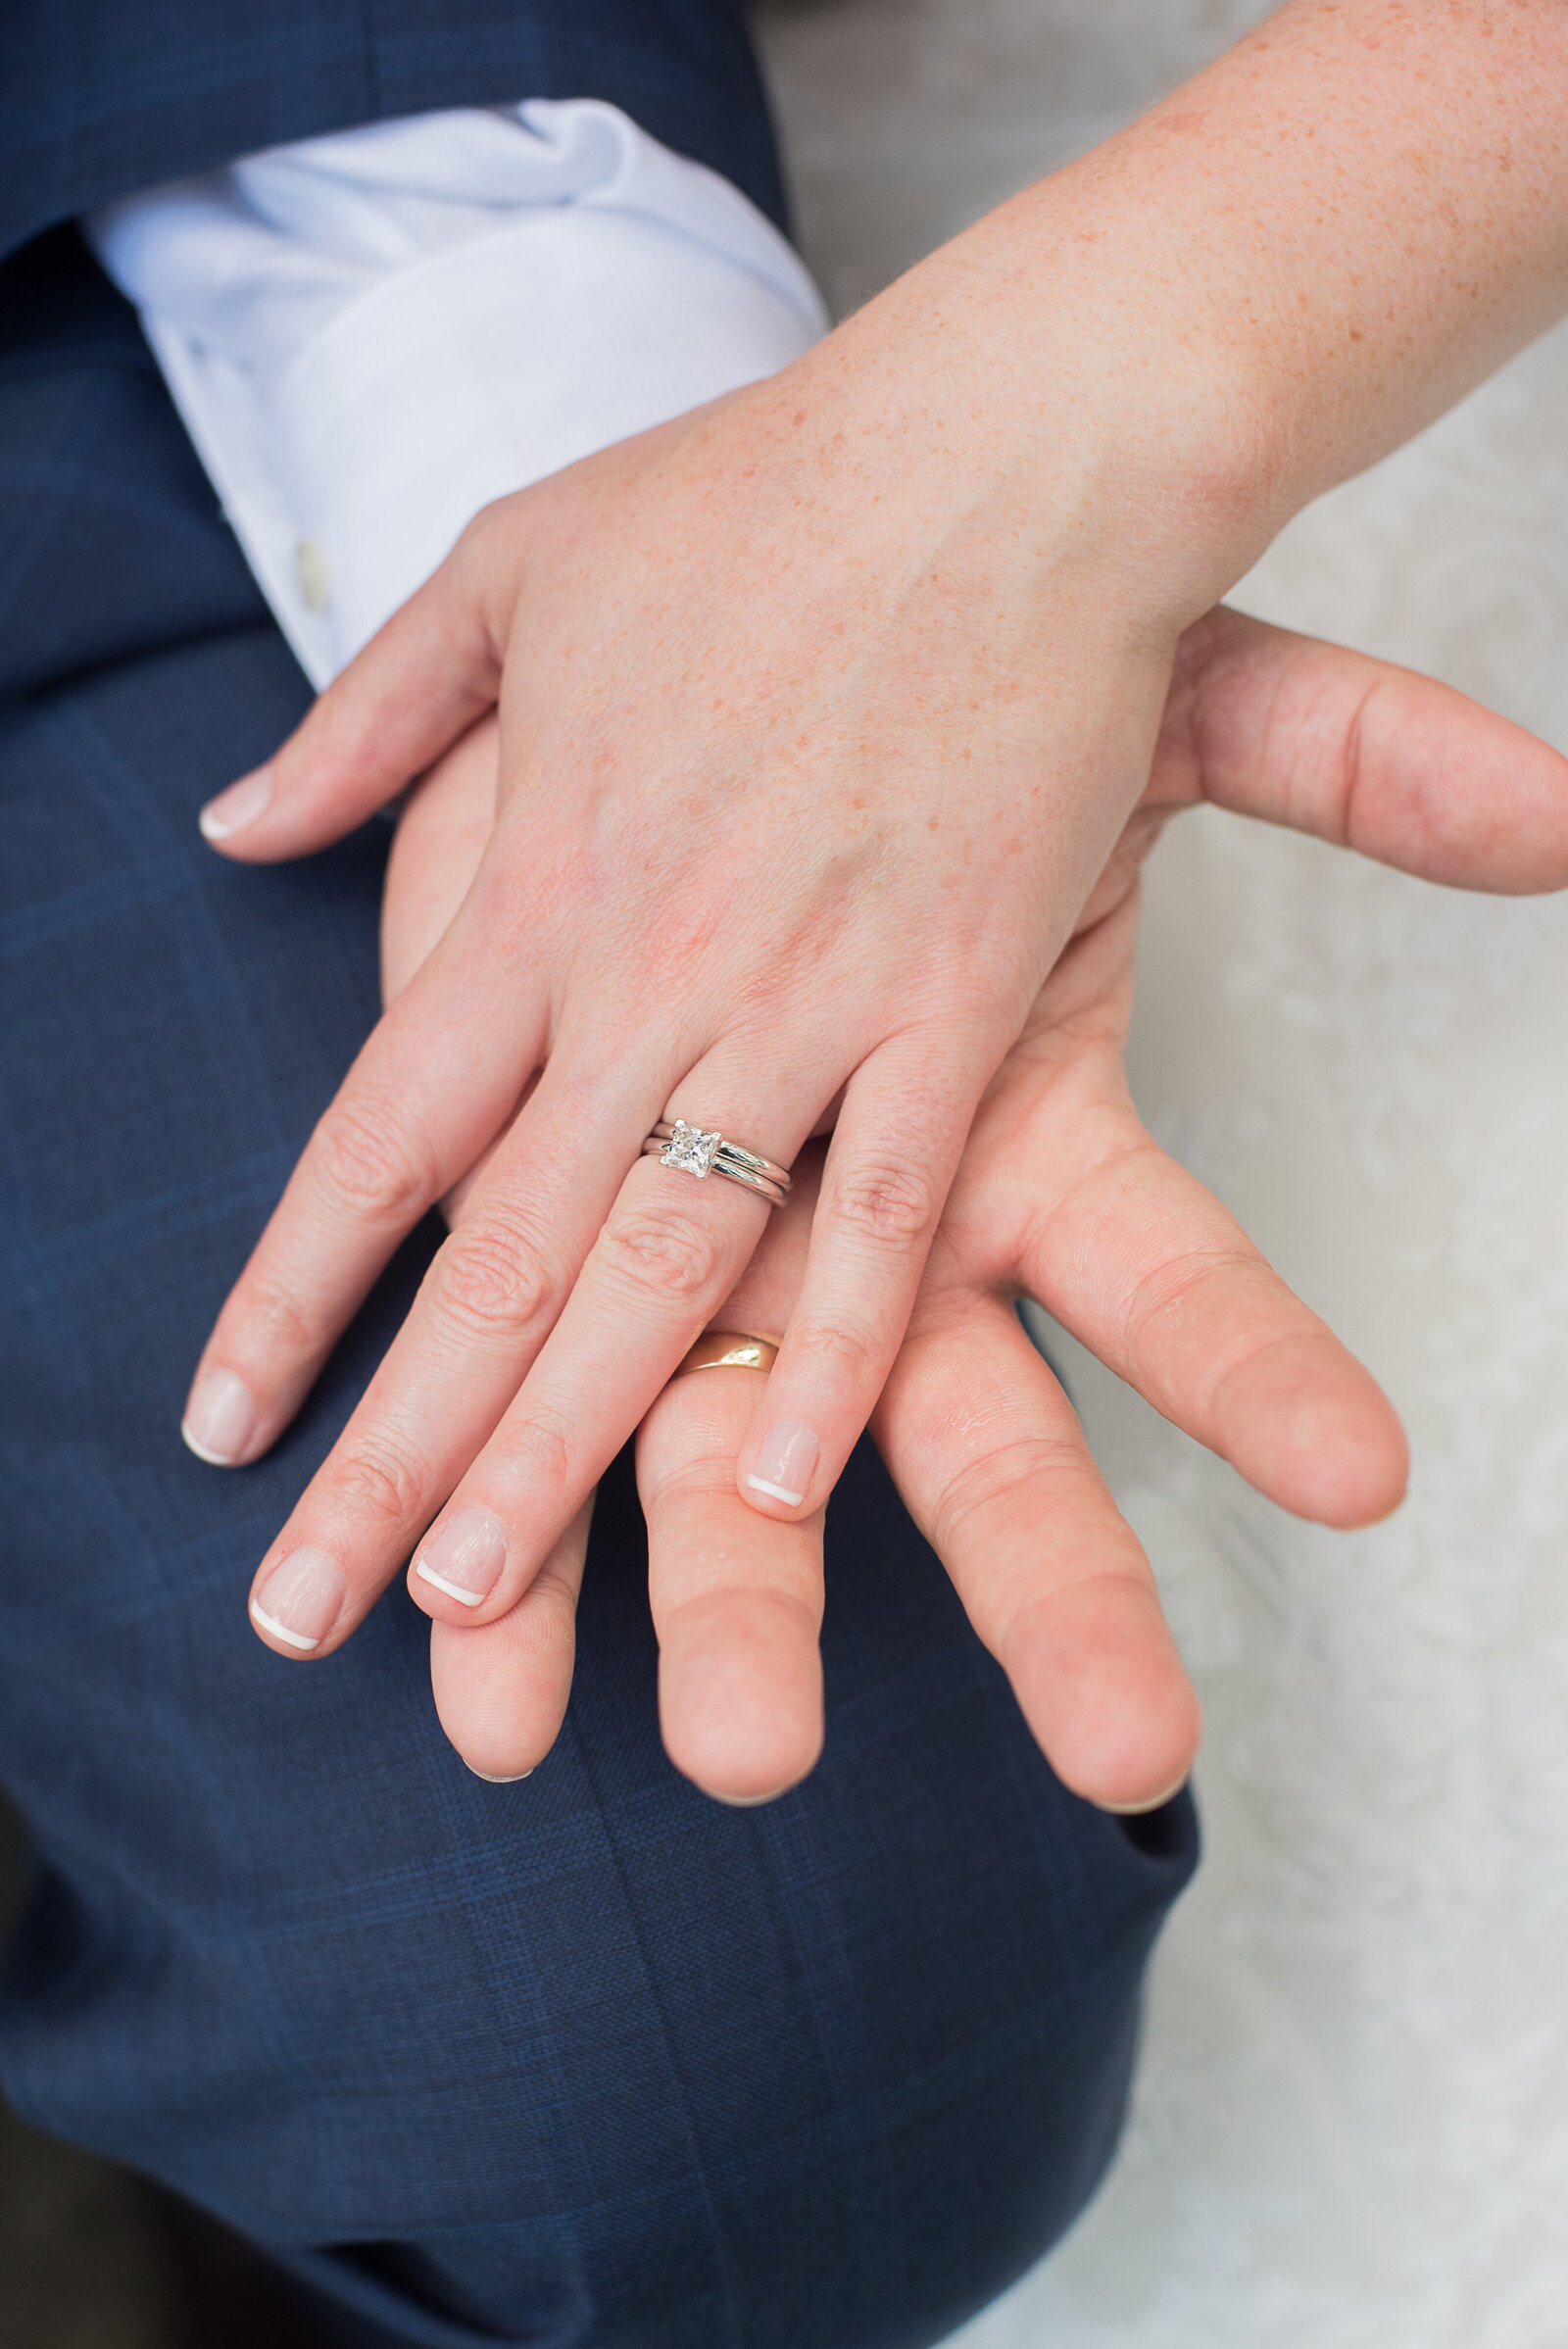 St SImons Island Epworth wedding rings hands bride groom husband wife